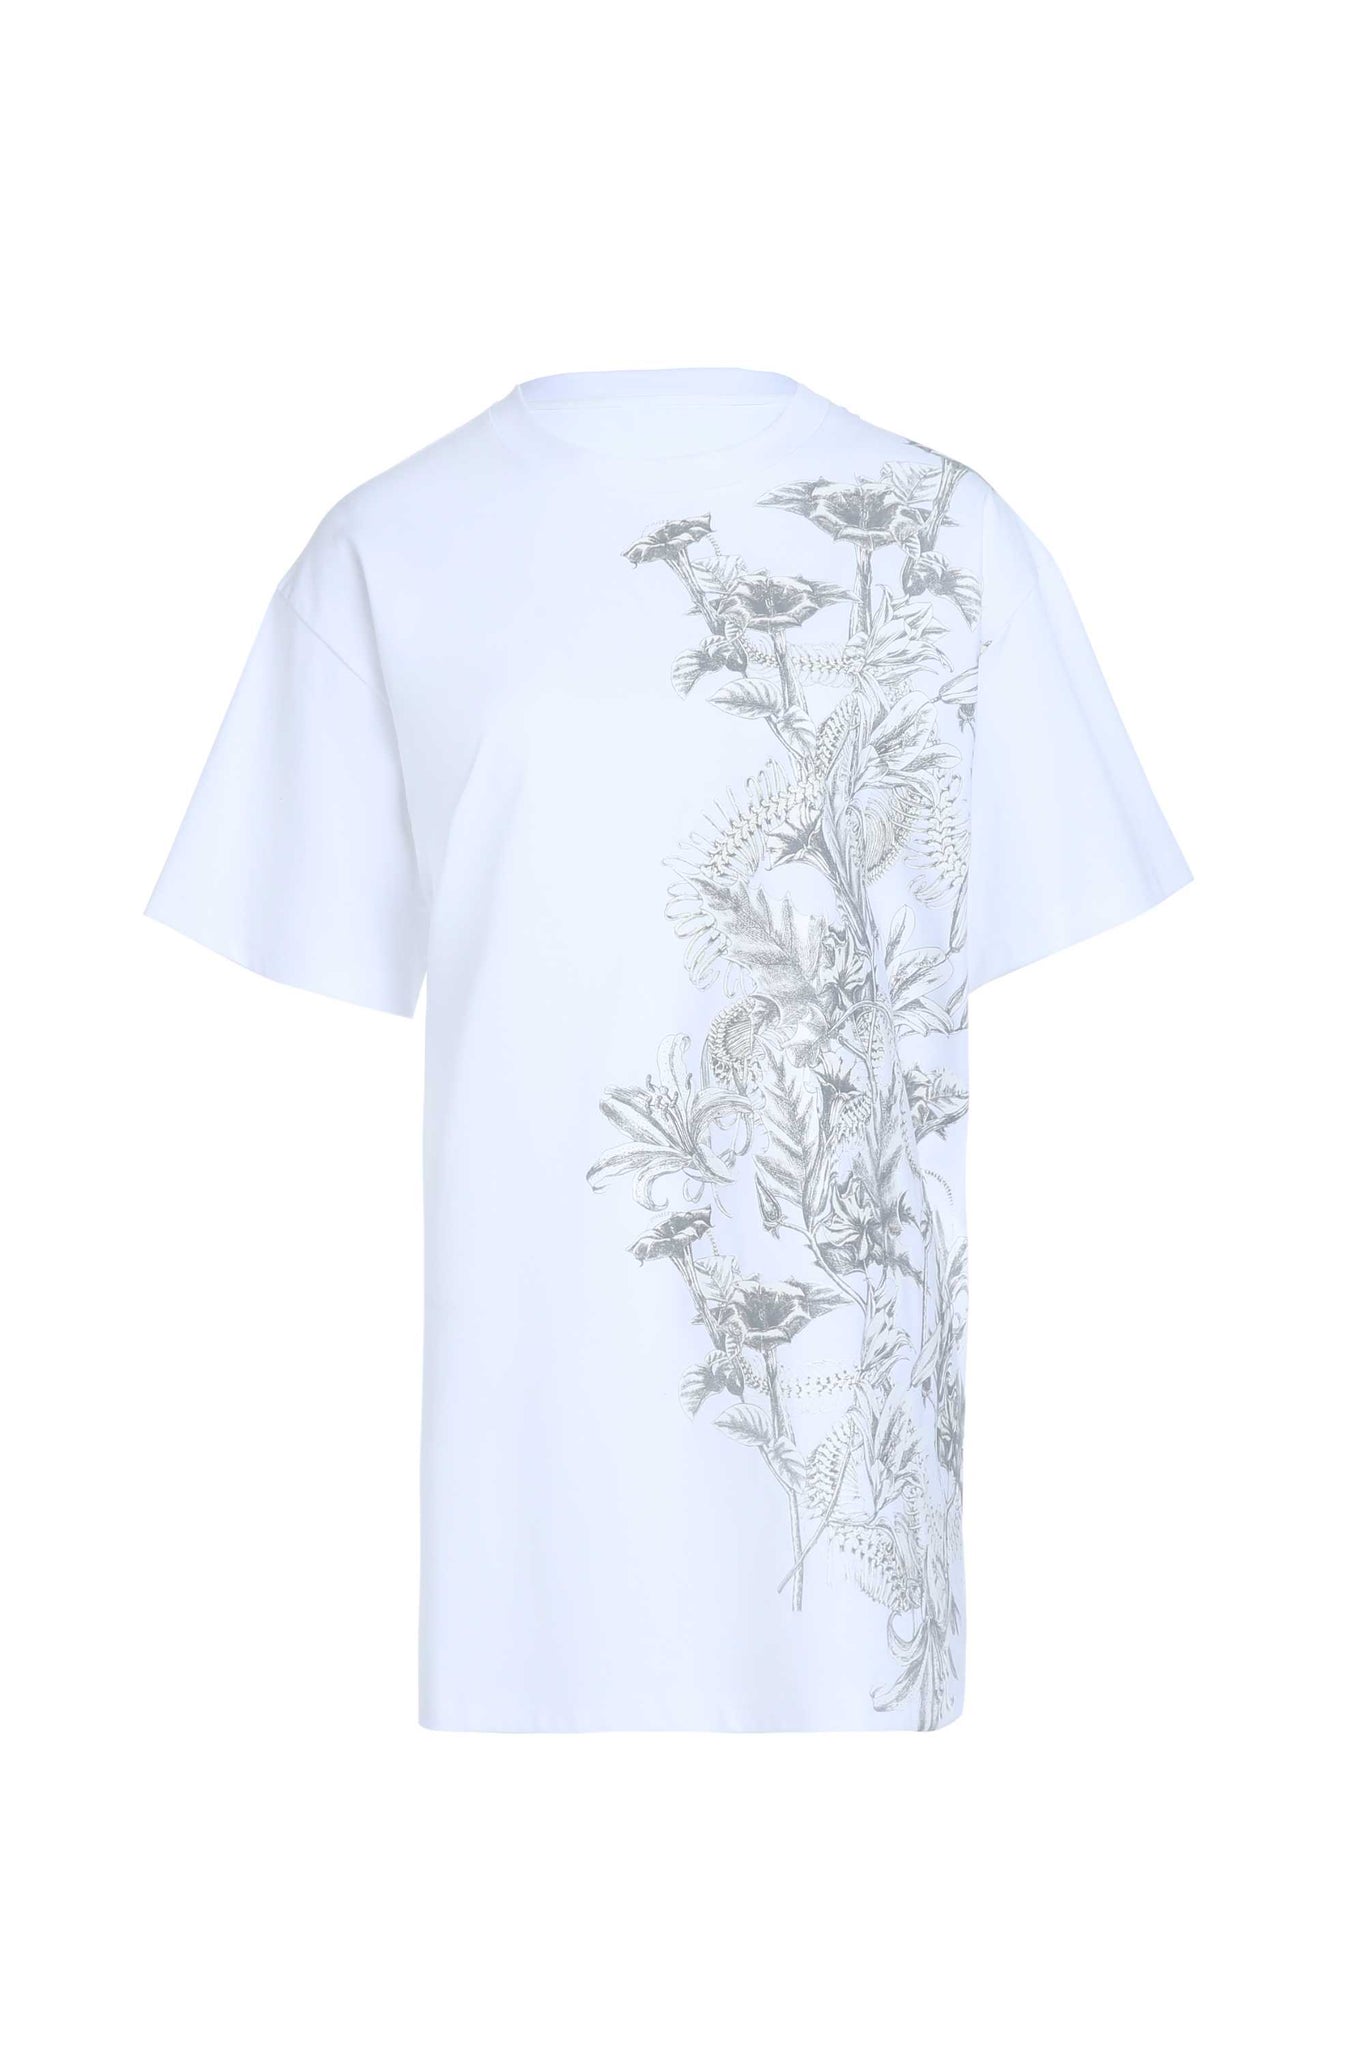 Flower Graphic White T-Shirt